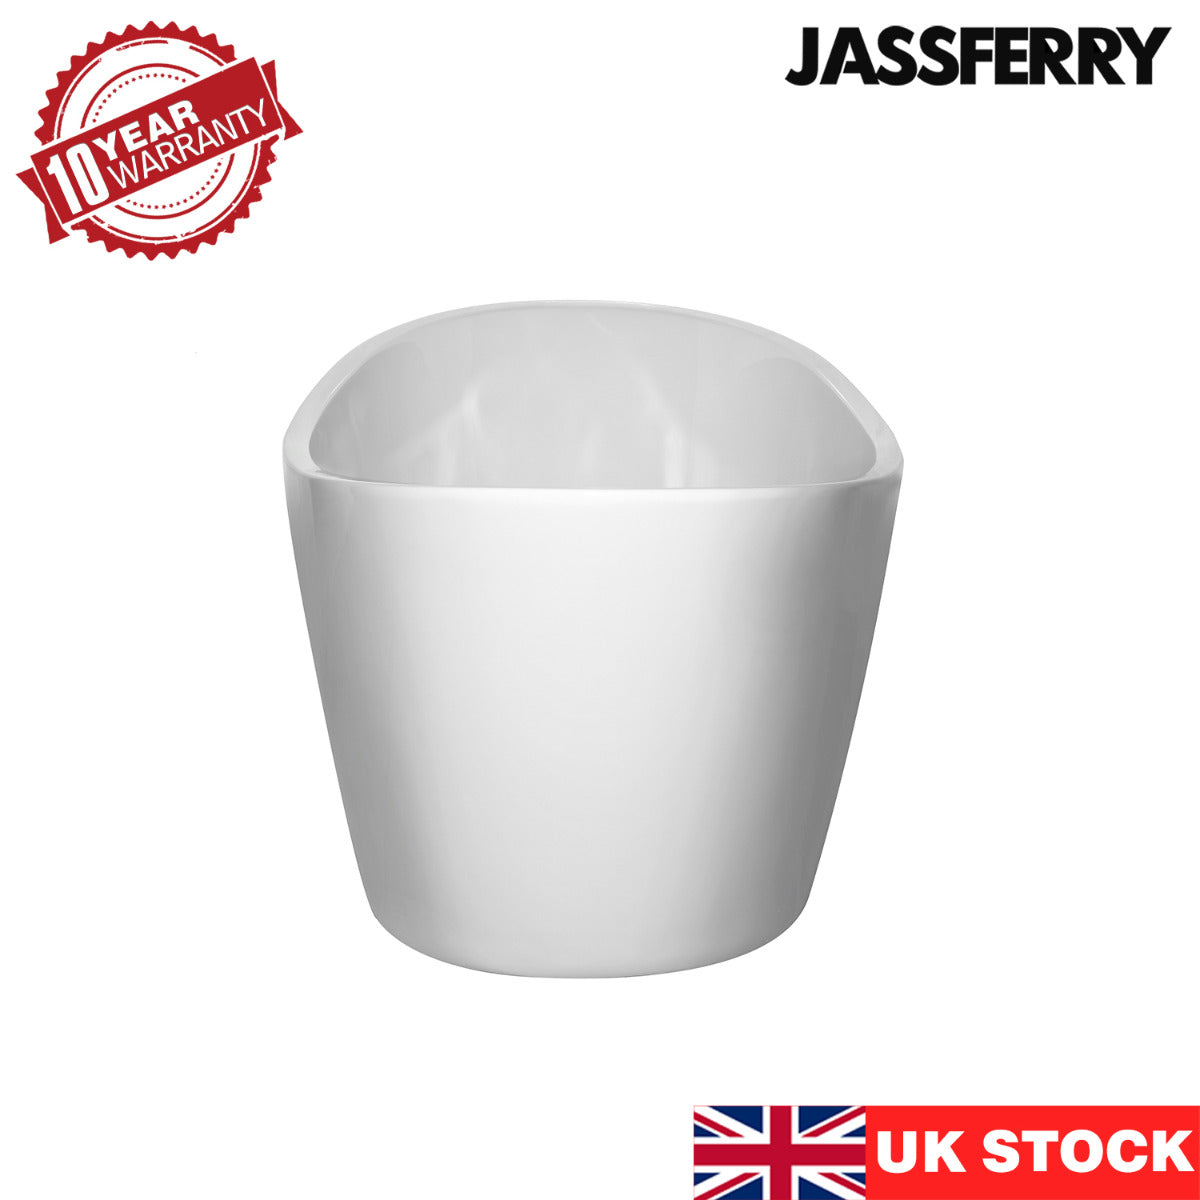 JassferryJASSFERRY 1700x785 mm Acrylic Modern Design Freestanding Bathtub Luxury Double EndedBathtubs